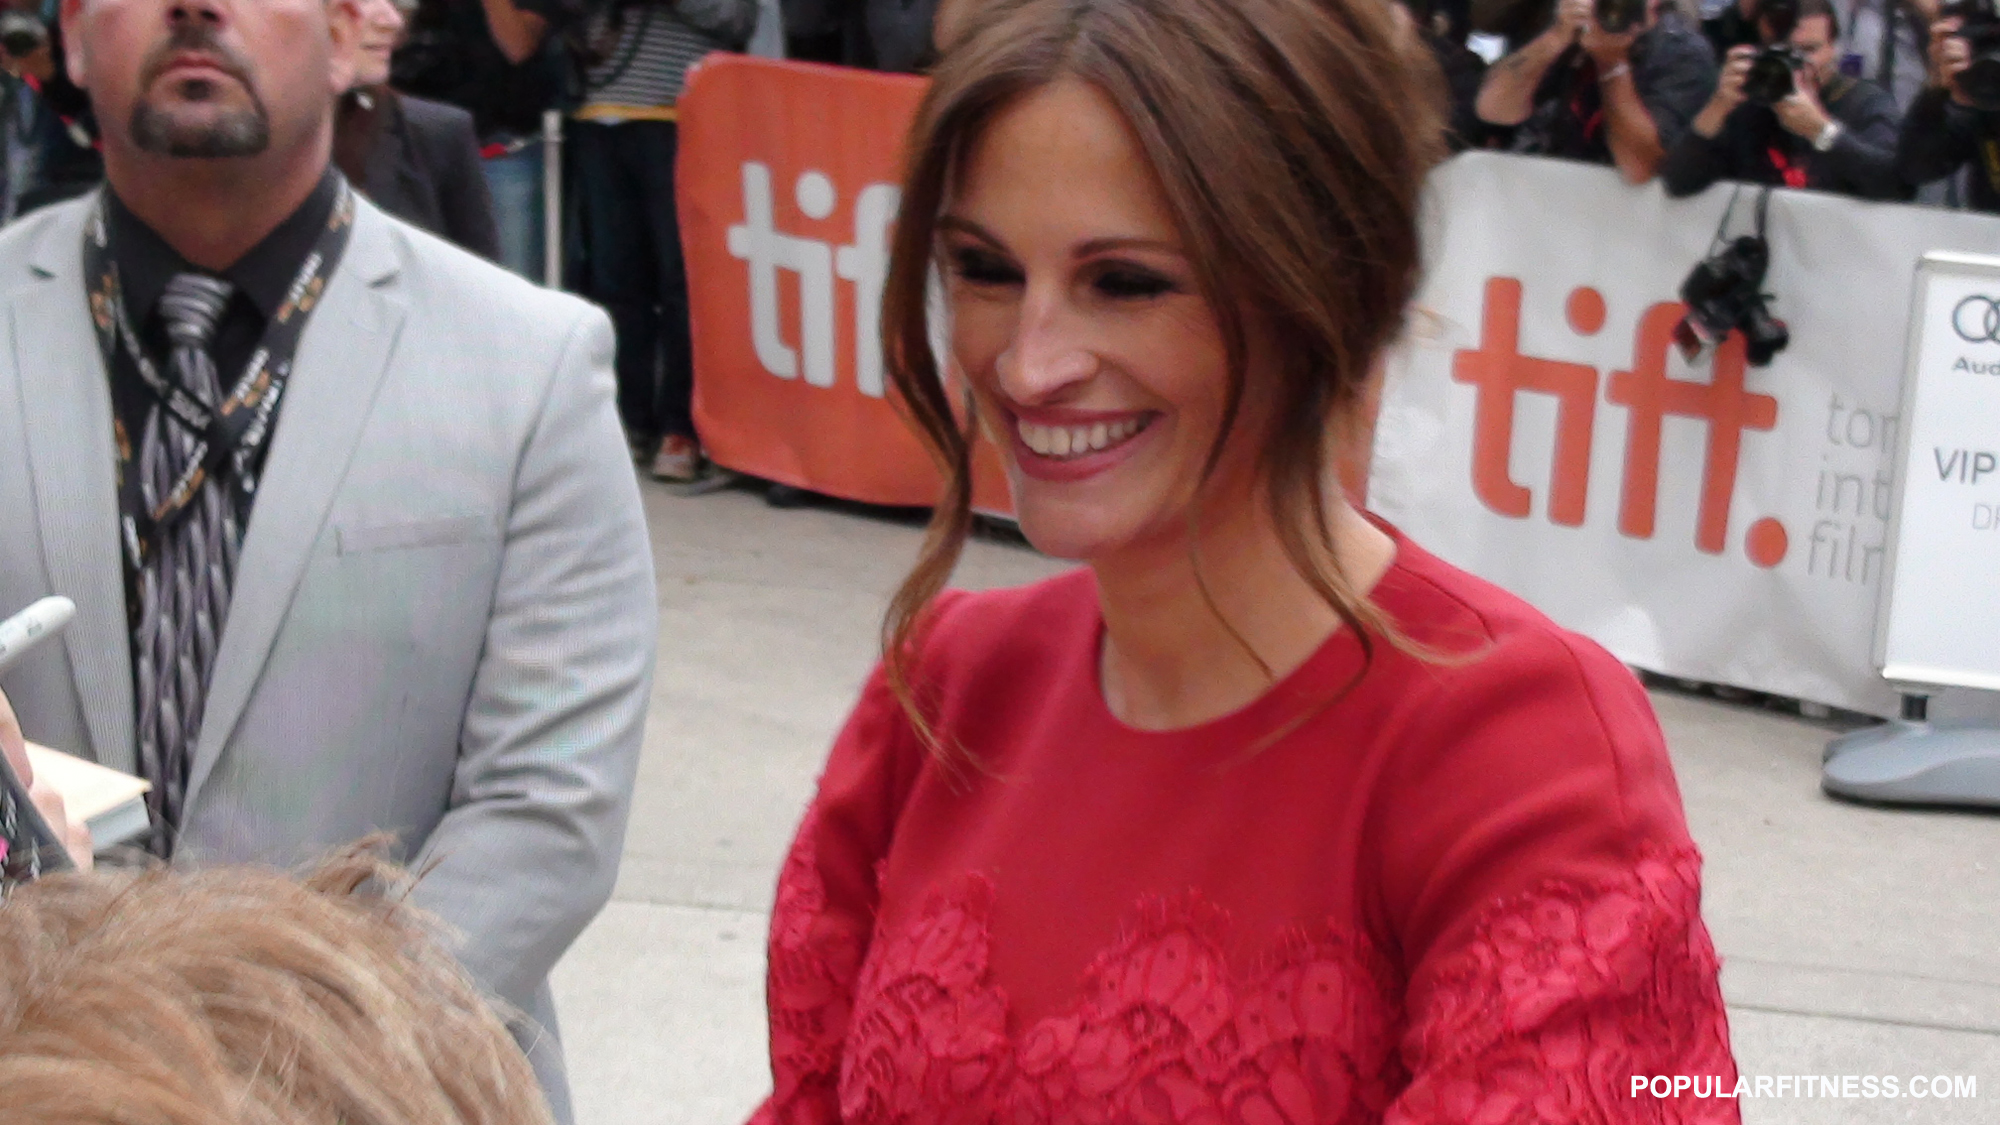 Julia Roberts at TIFF wearing red dress - close up